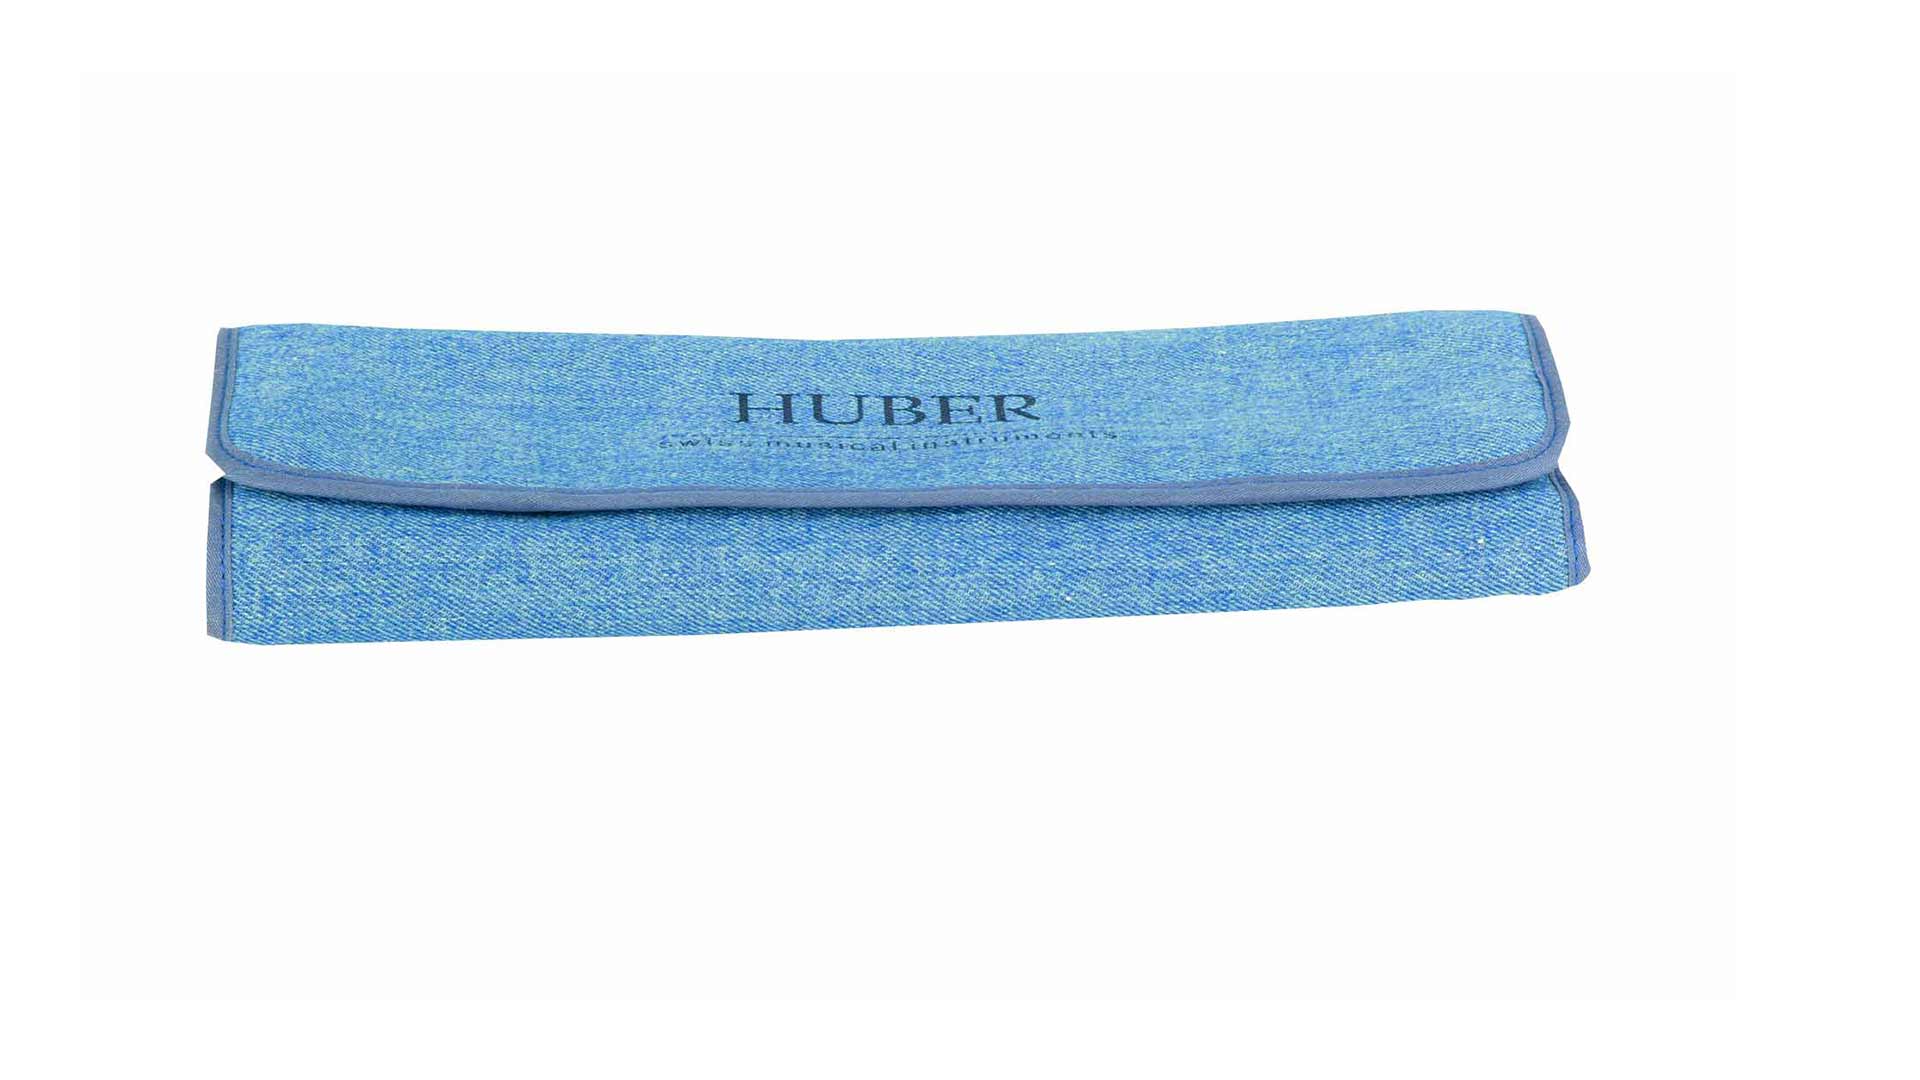 Huber, jeans pocket, tenor, blue cotton